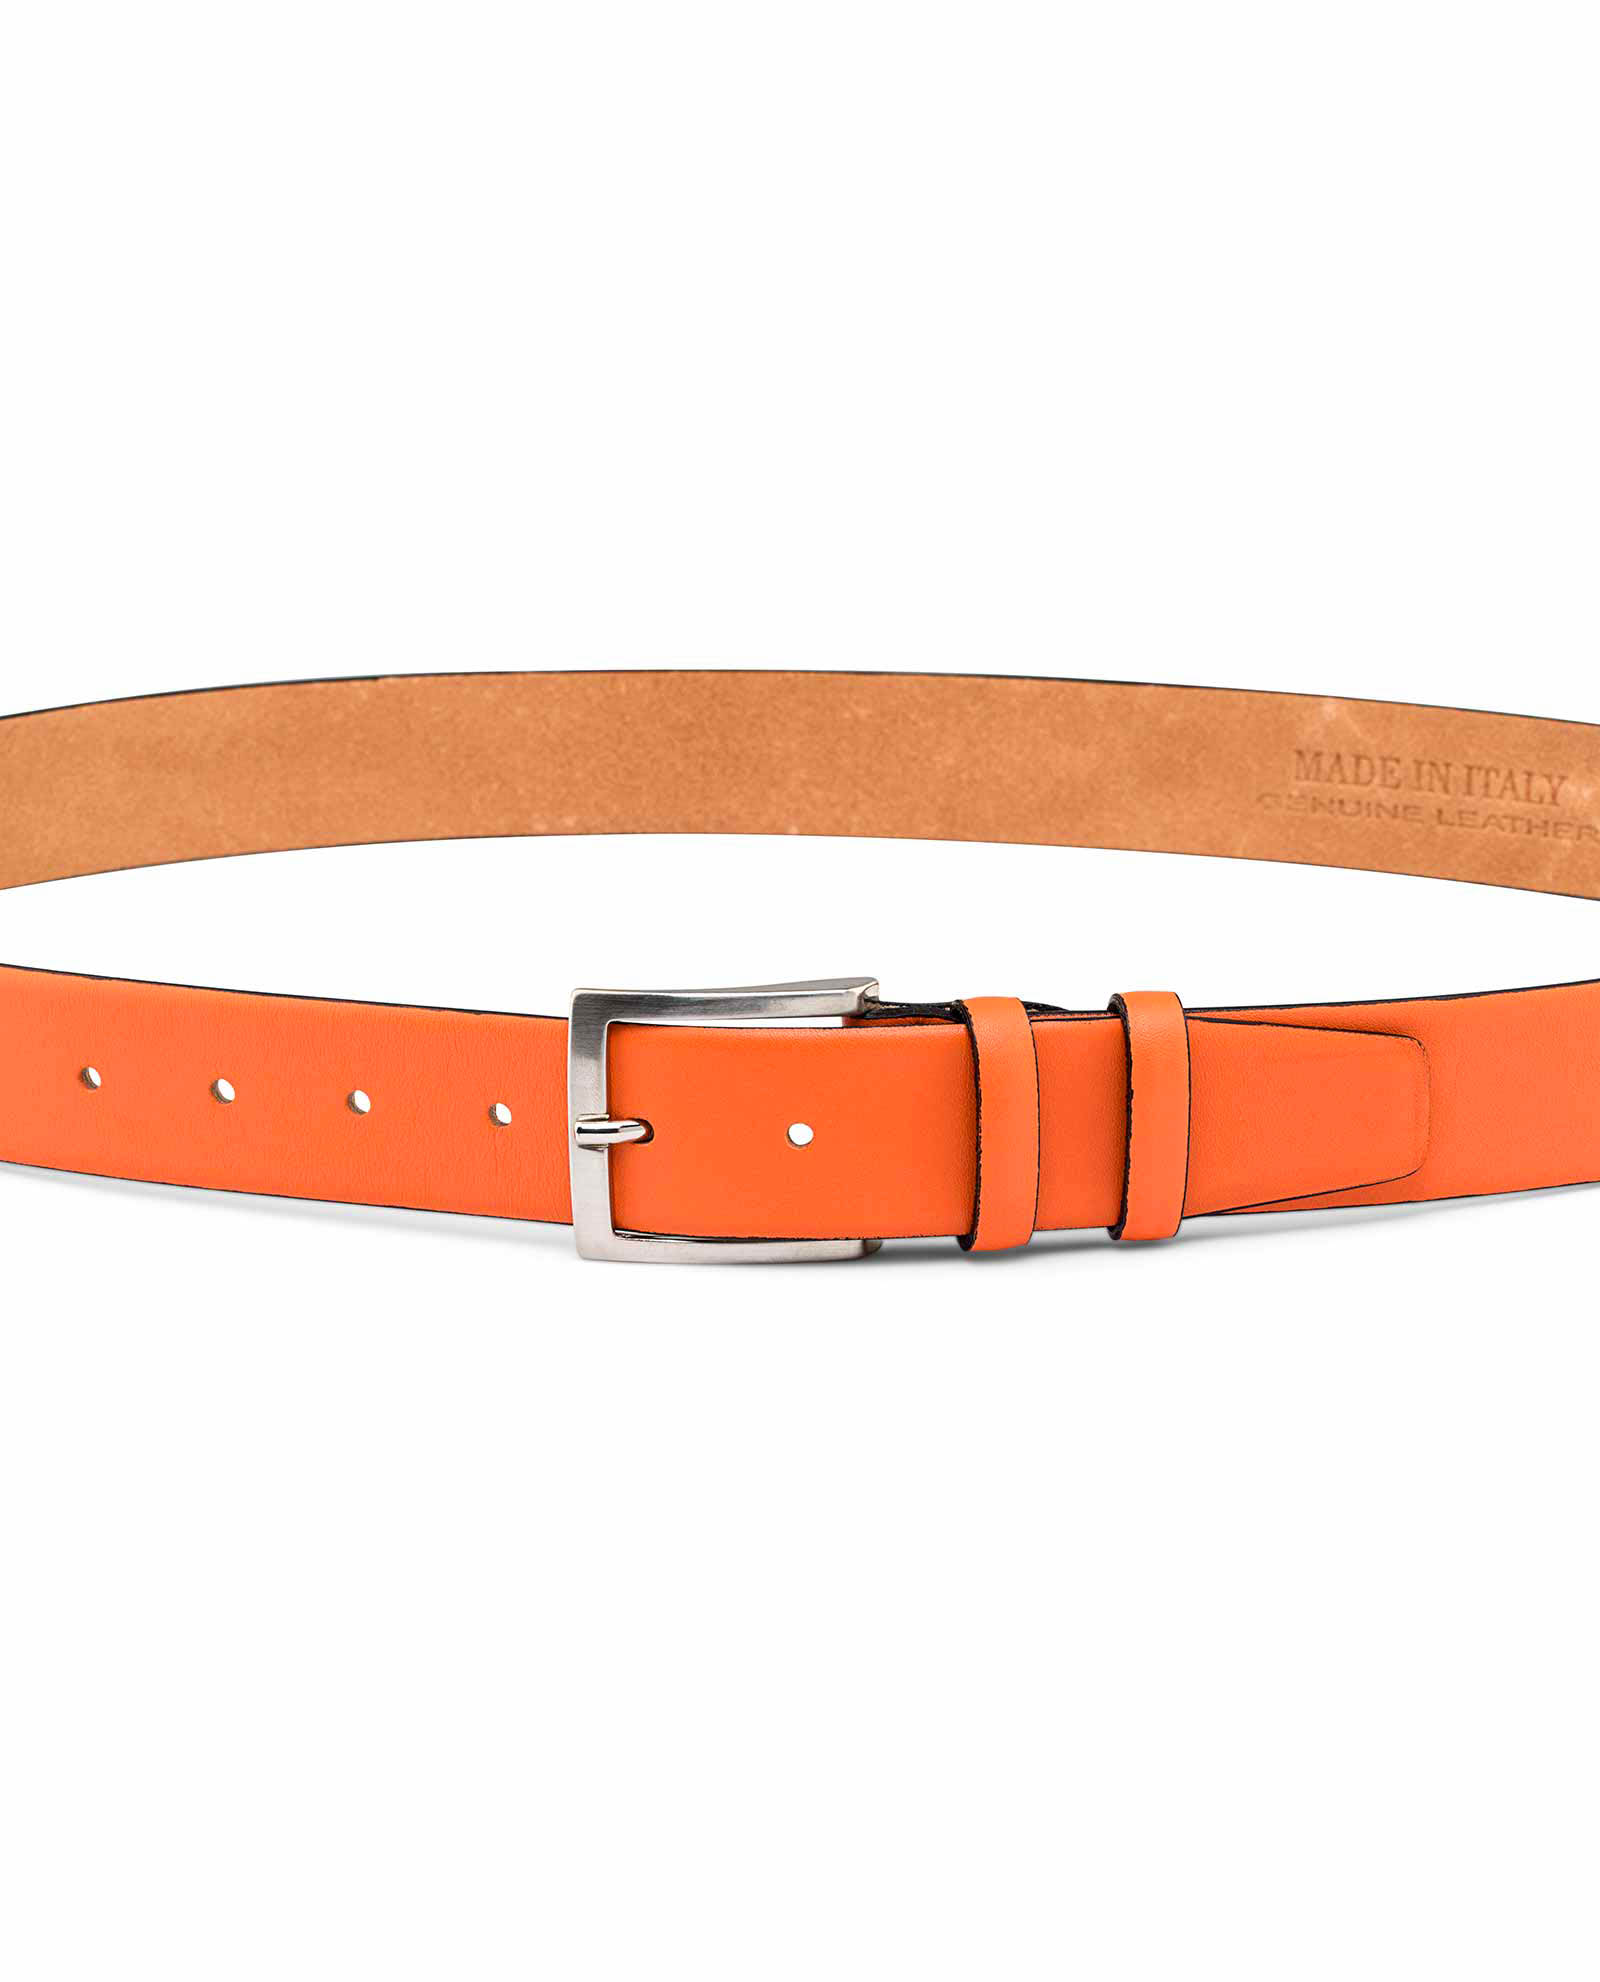 Buy Orange Womens Belt - Smooth Leather - Free Shipping!